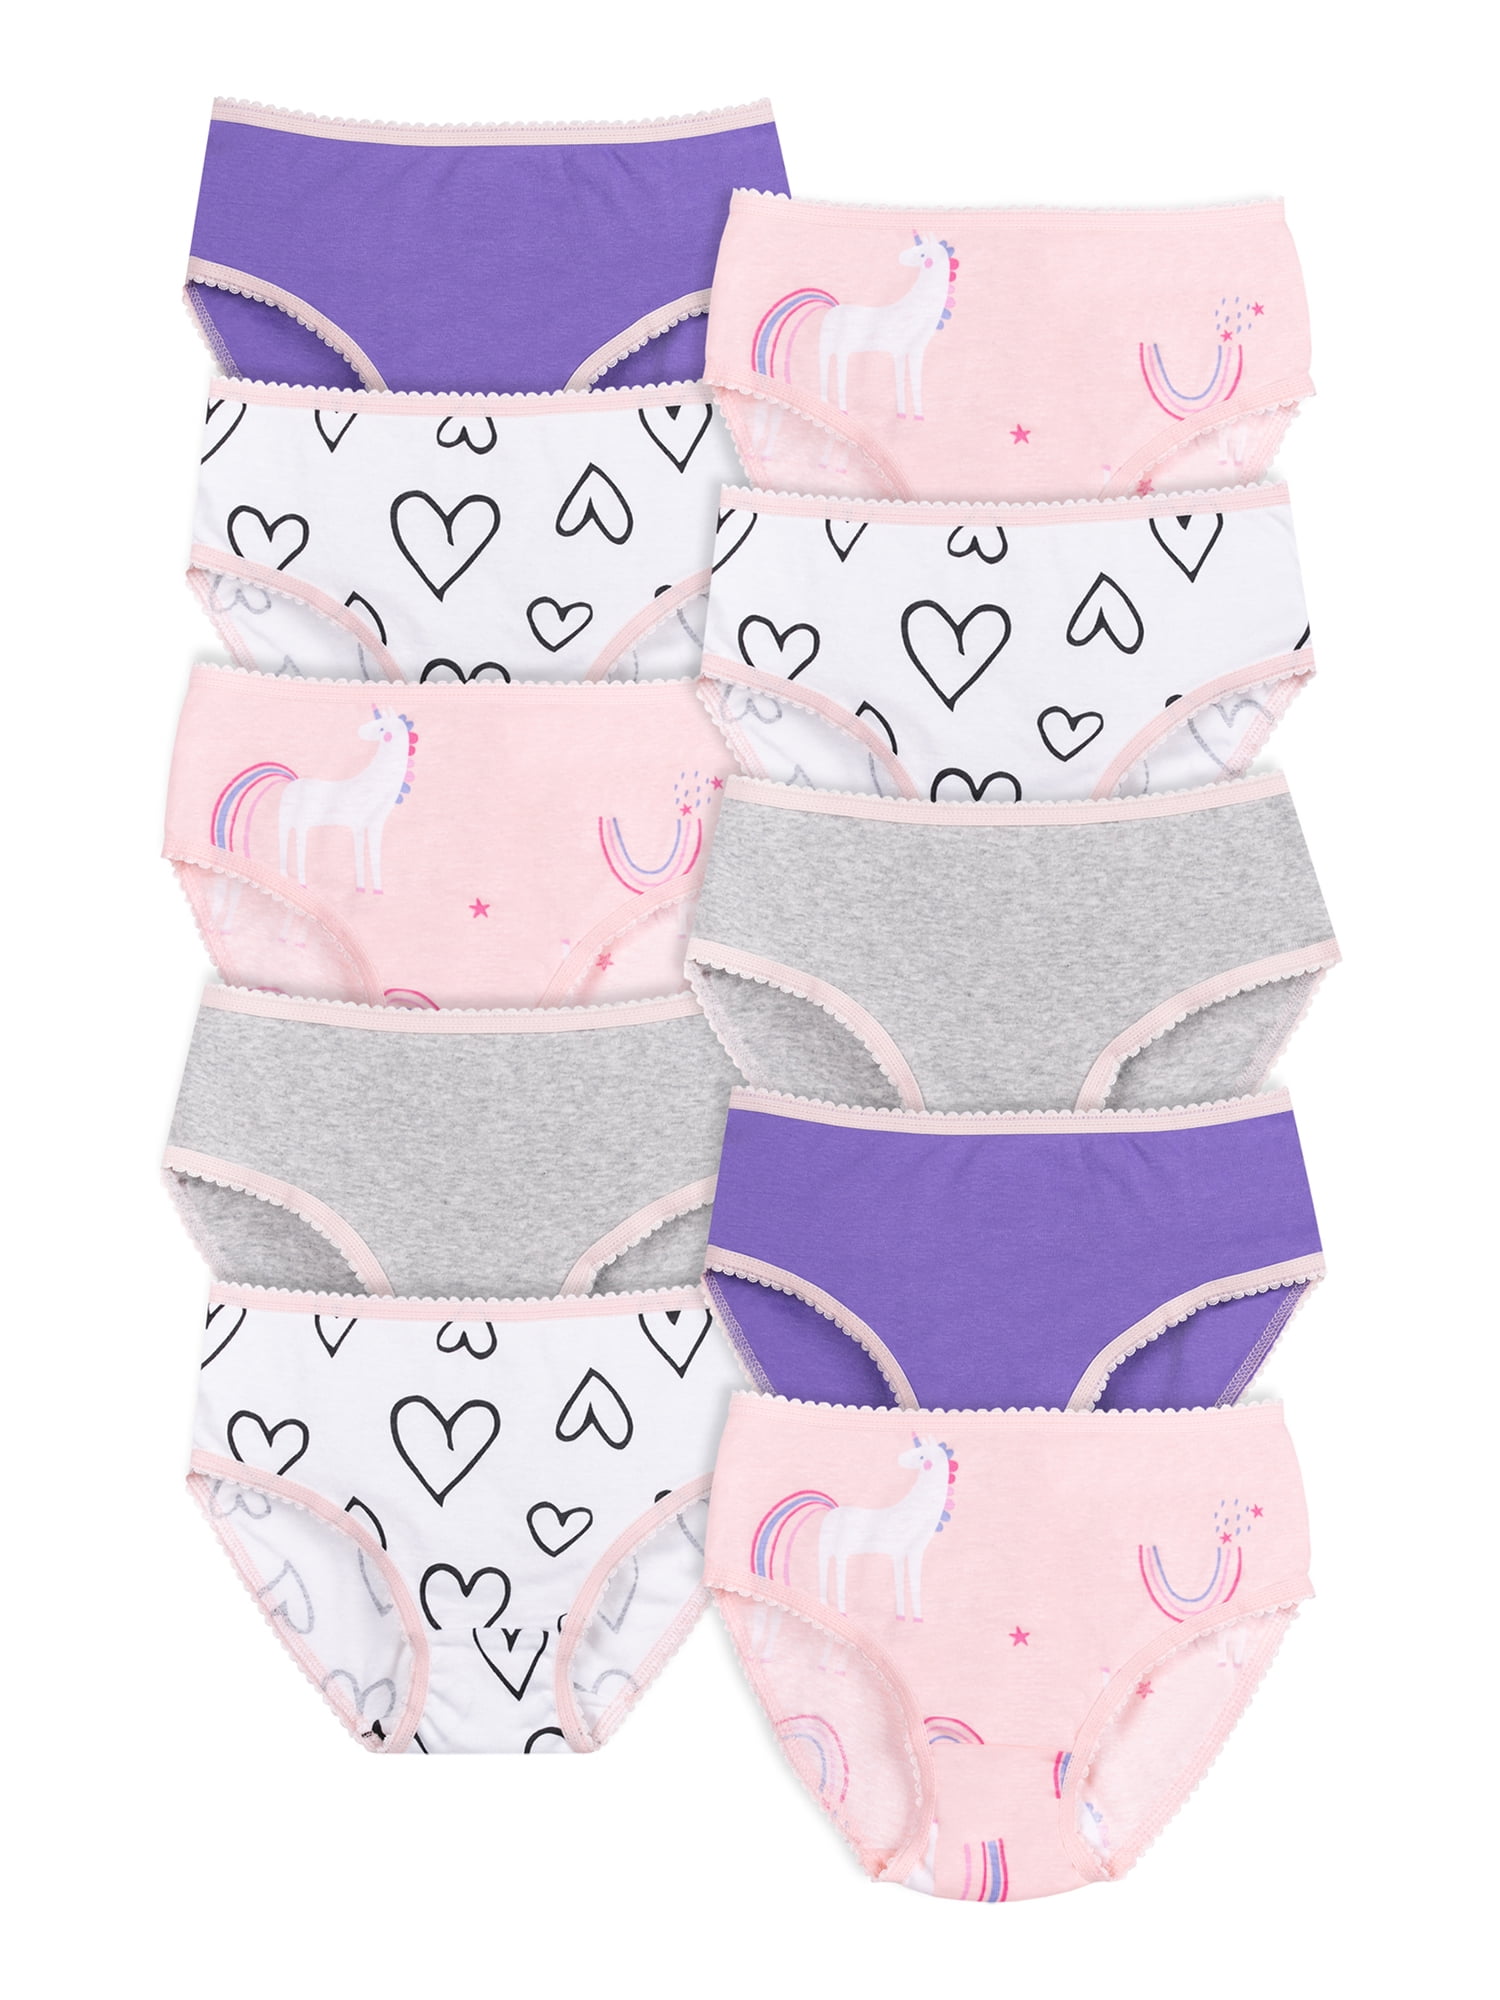 Little Star Organic Toddler Girl Brief Underwear Panties,10PK, Sizes 2T-5T